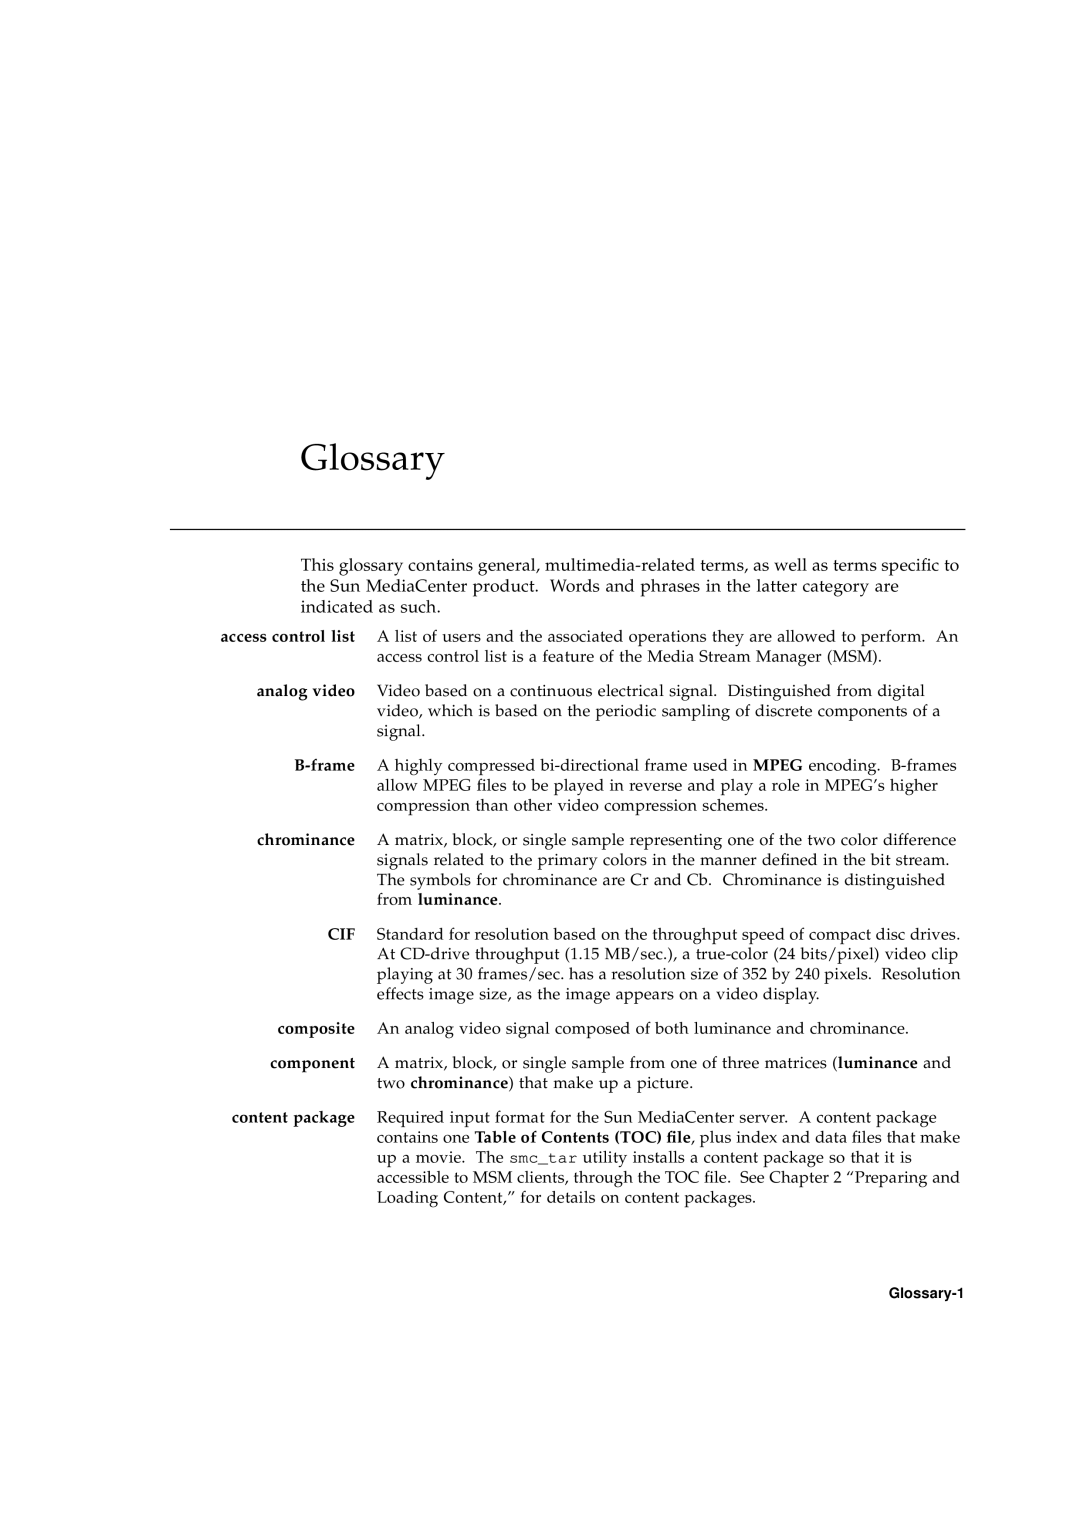 Sun Microsystems 2.1 manual Glossary-1 